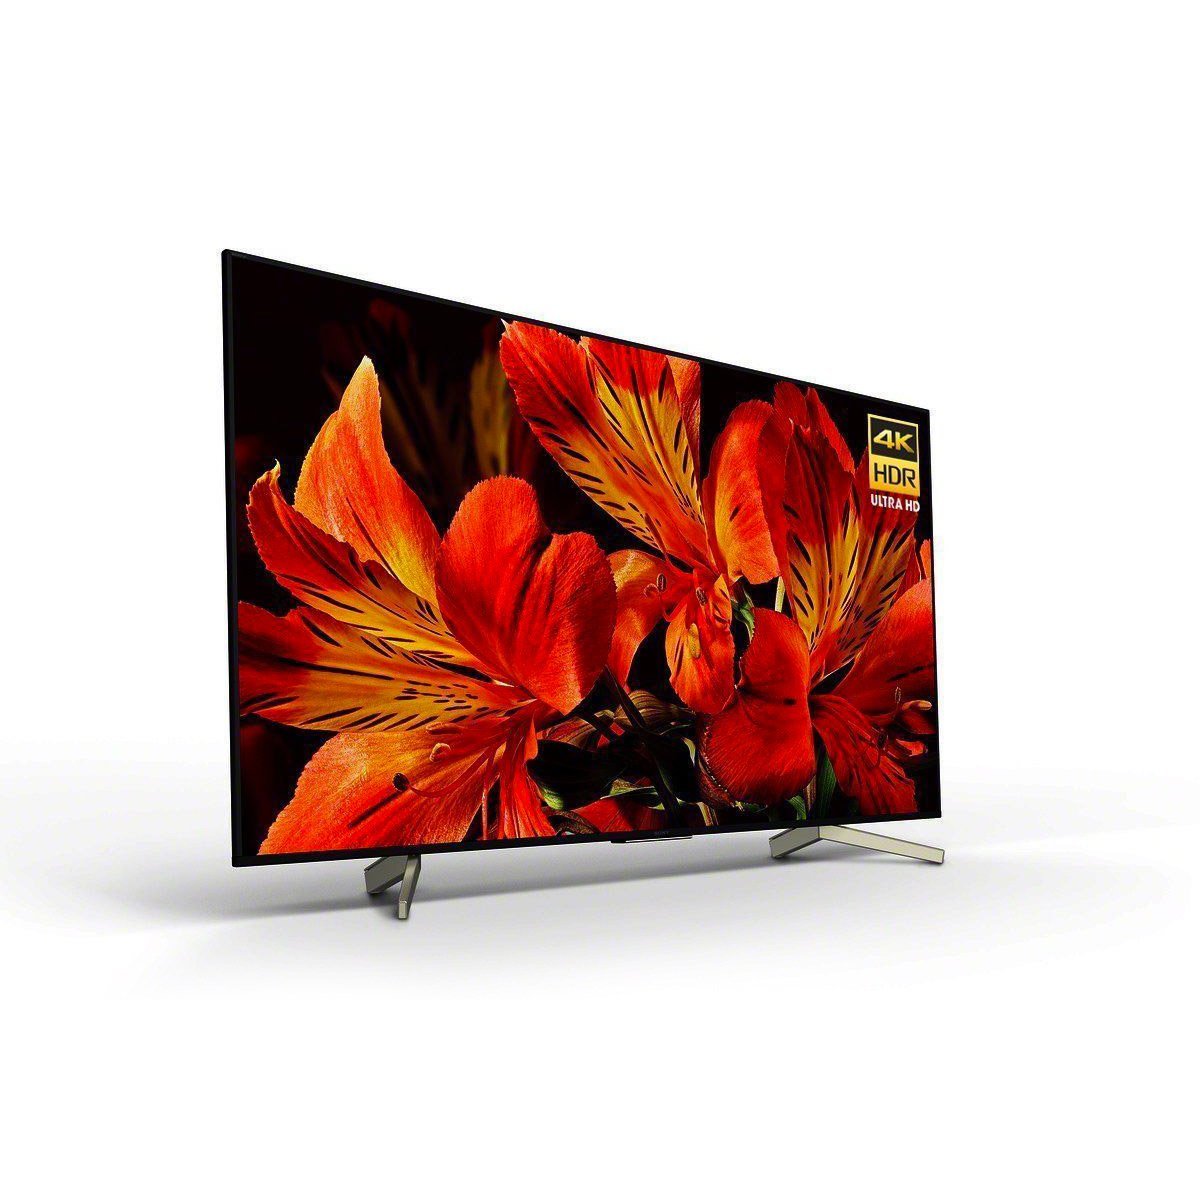 Sony XBR-65X850F 65-Inch 4K Ultra HD Smart LED TV